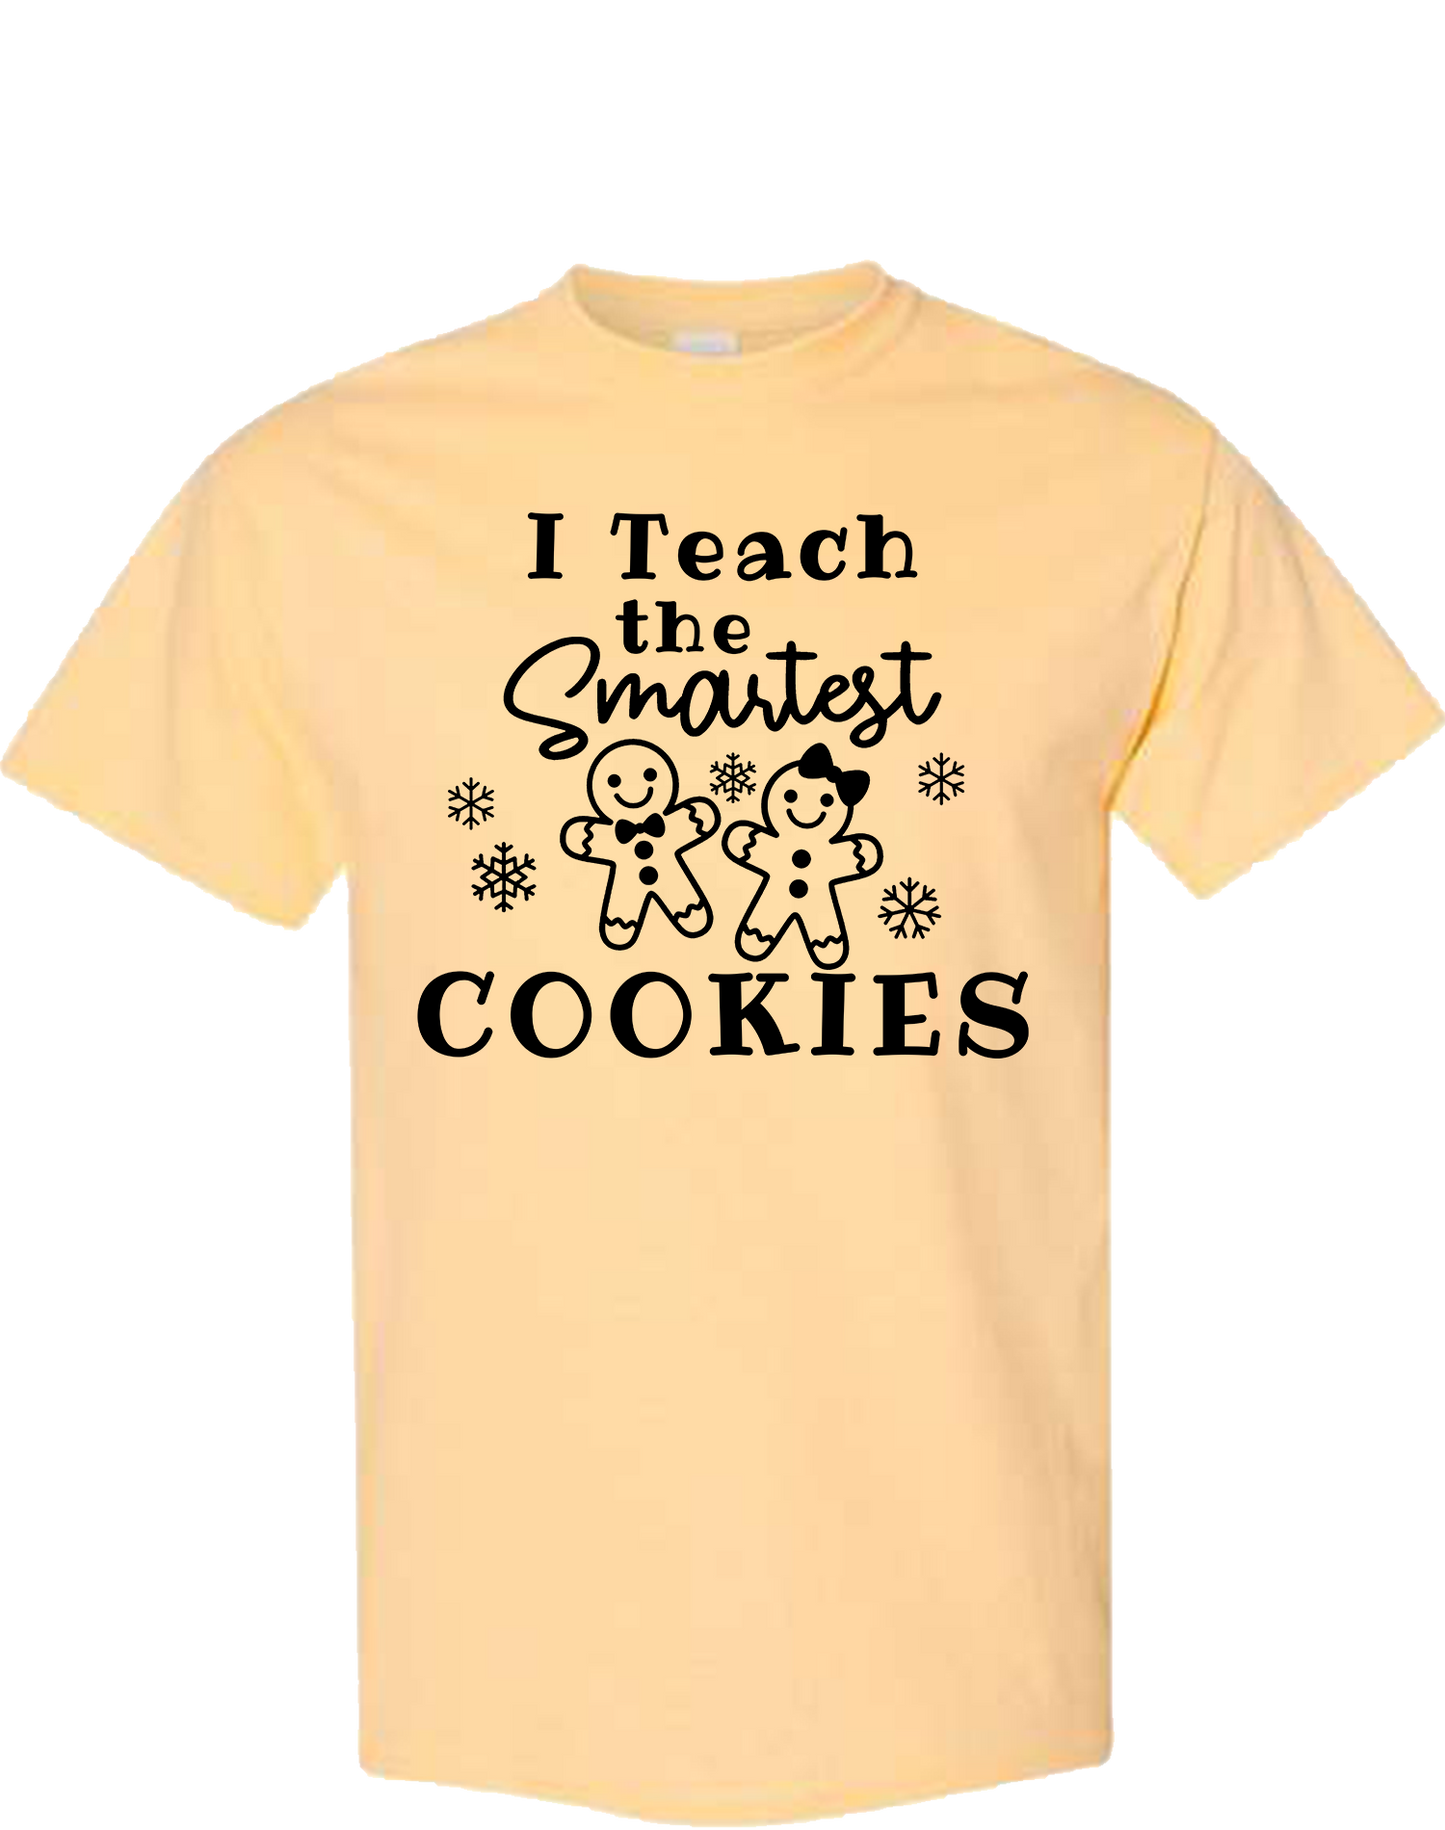 I Teach the Smartest Cookies